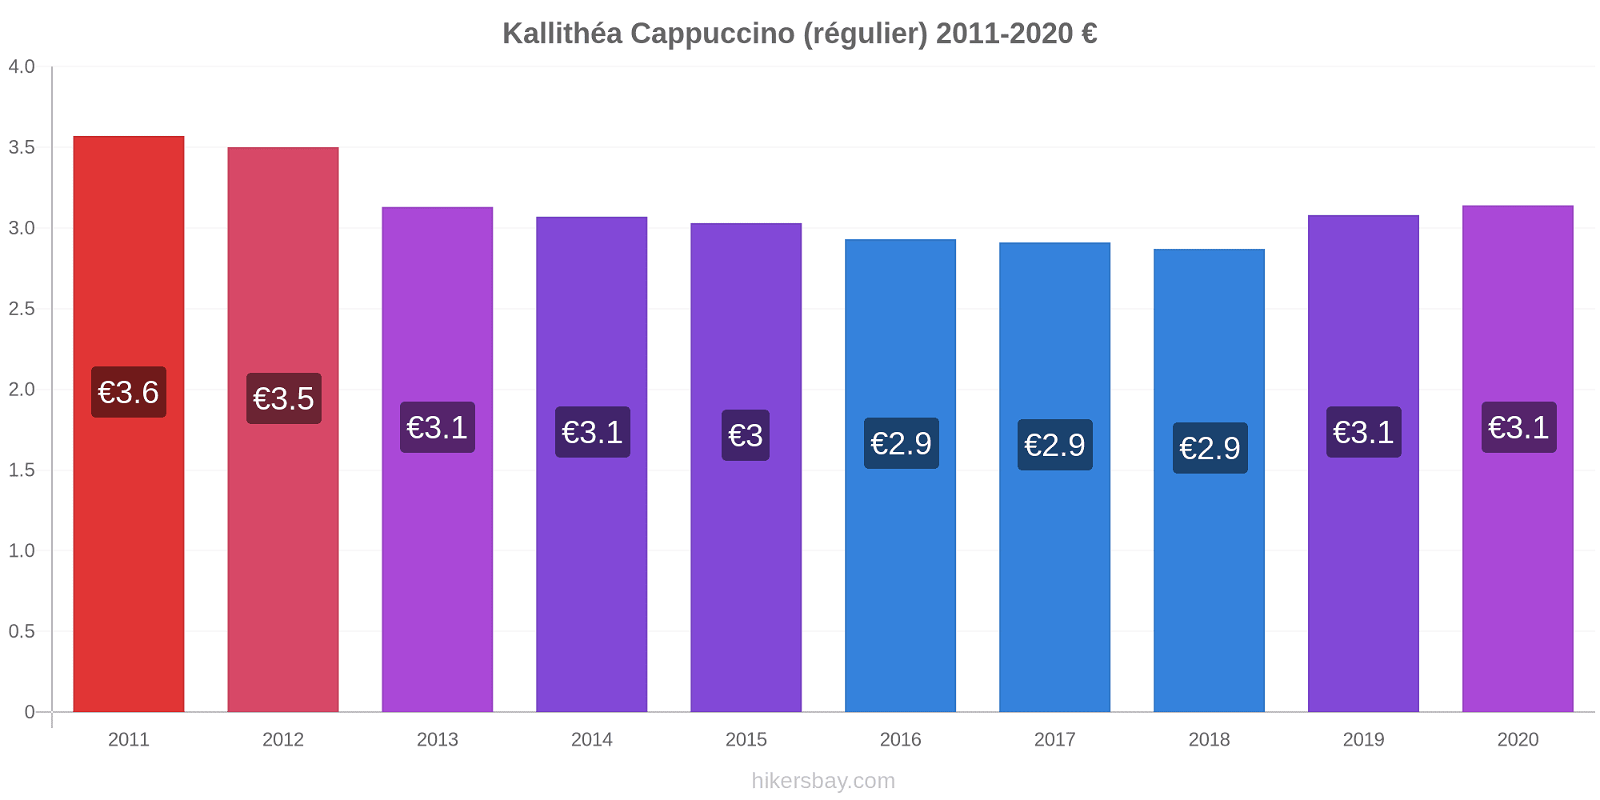 Kallithéa changements de prix Cappuccino (régulier) hikersbay.com